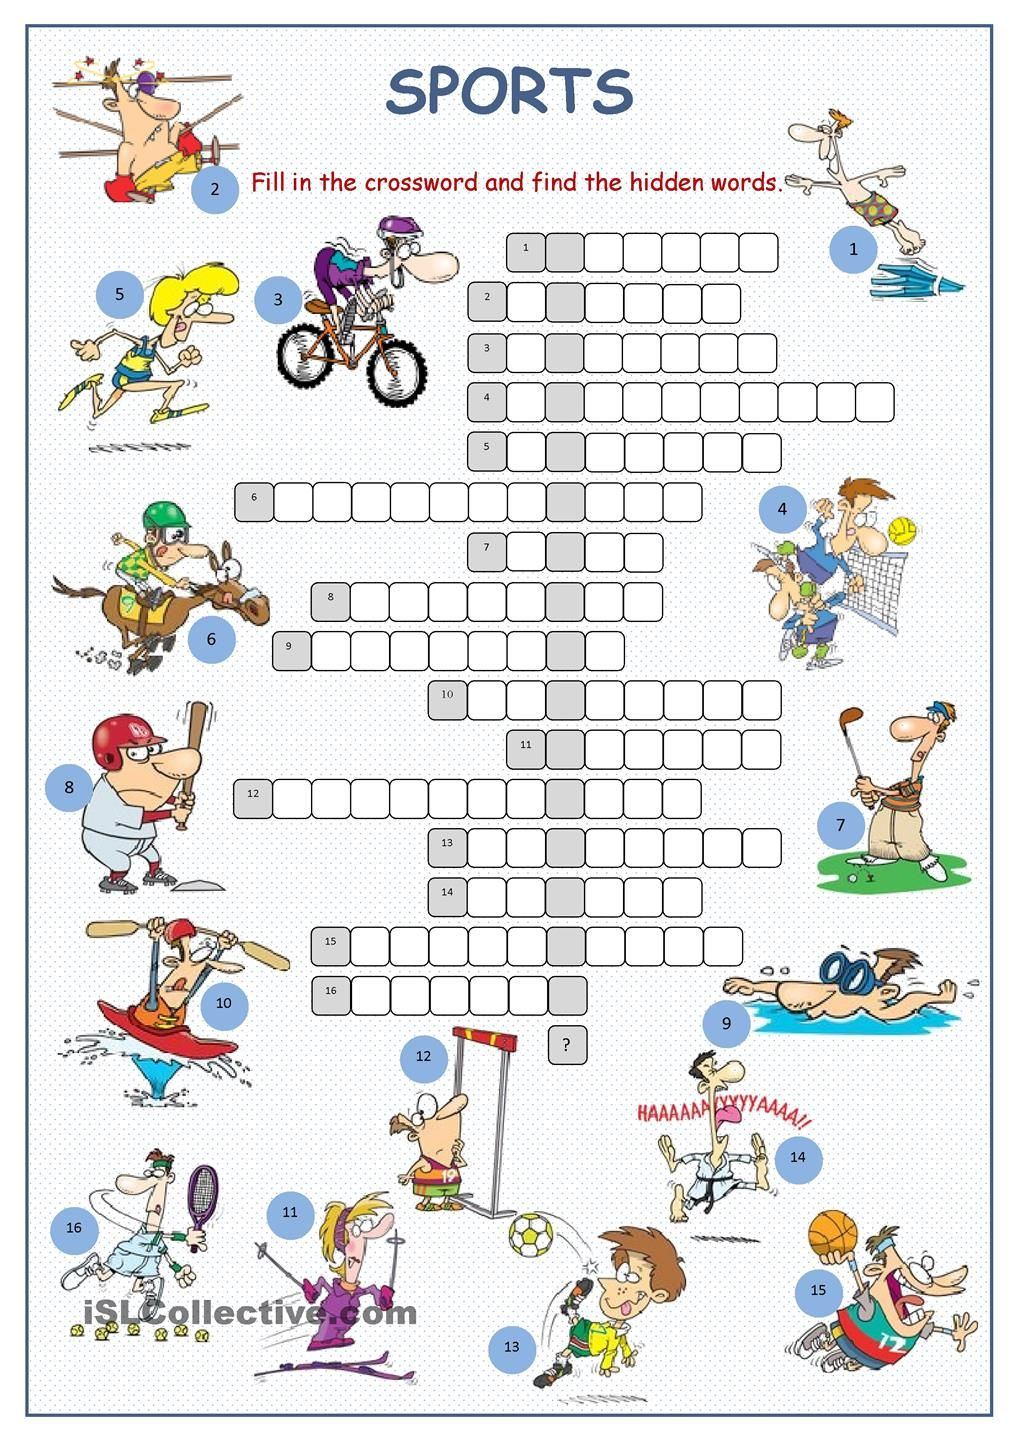 Sports Crossword Puzzle | English | Sports Crossword, Sport English - Sports Crossword Puzzles Printable